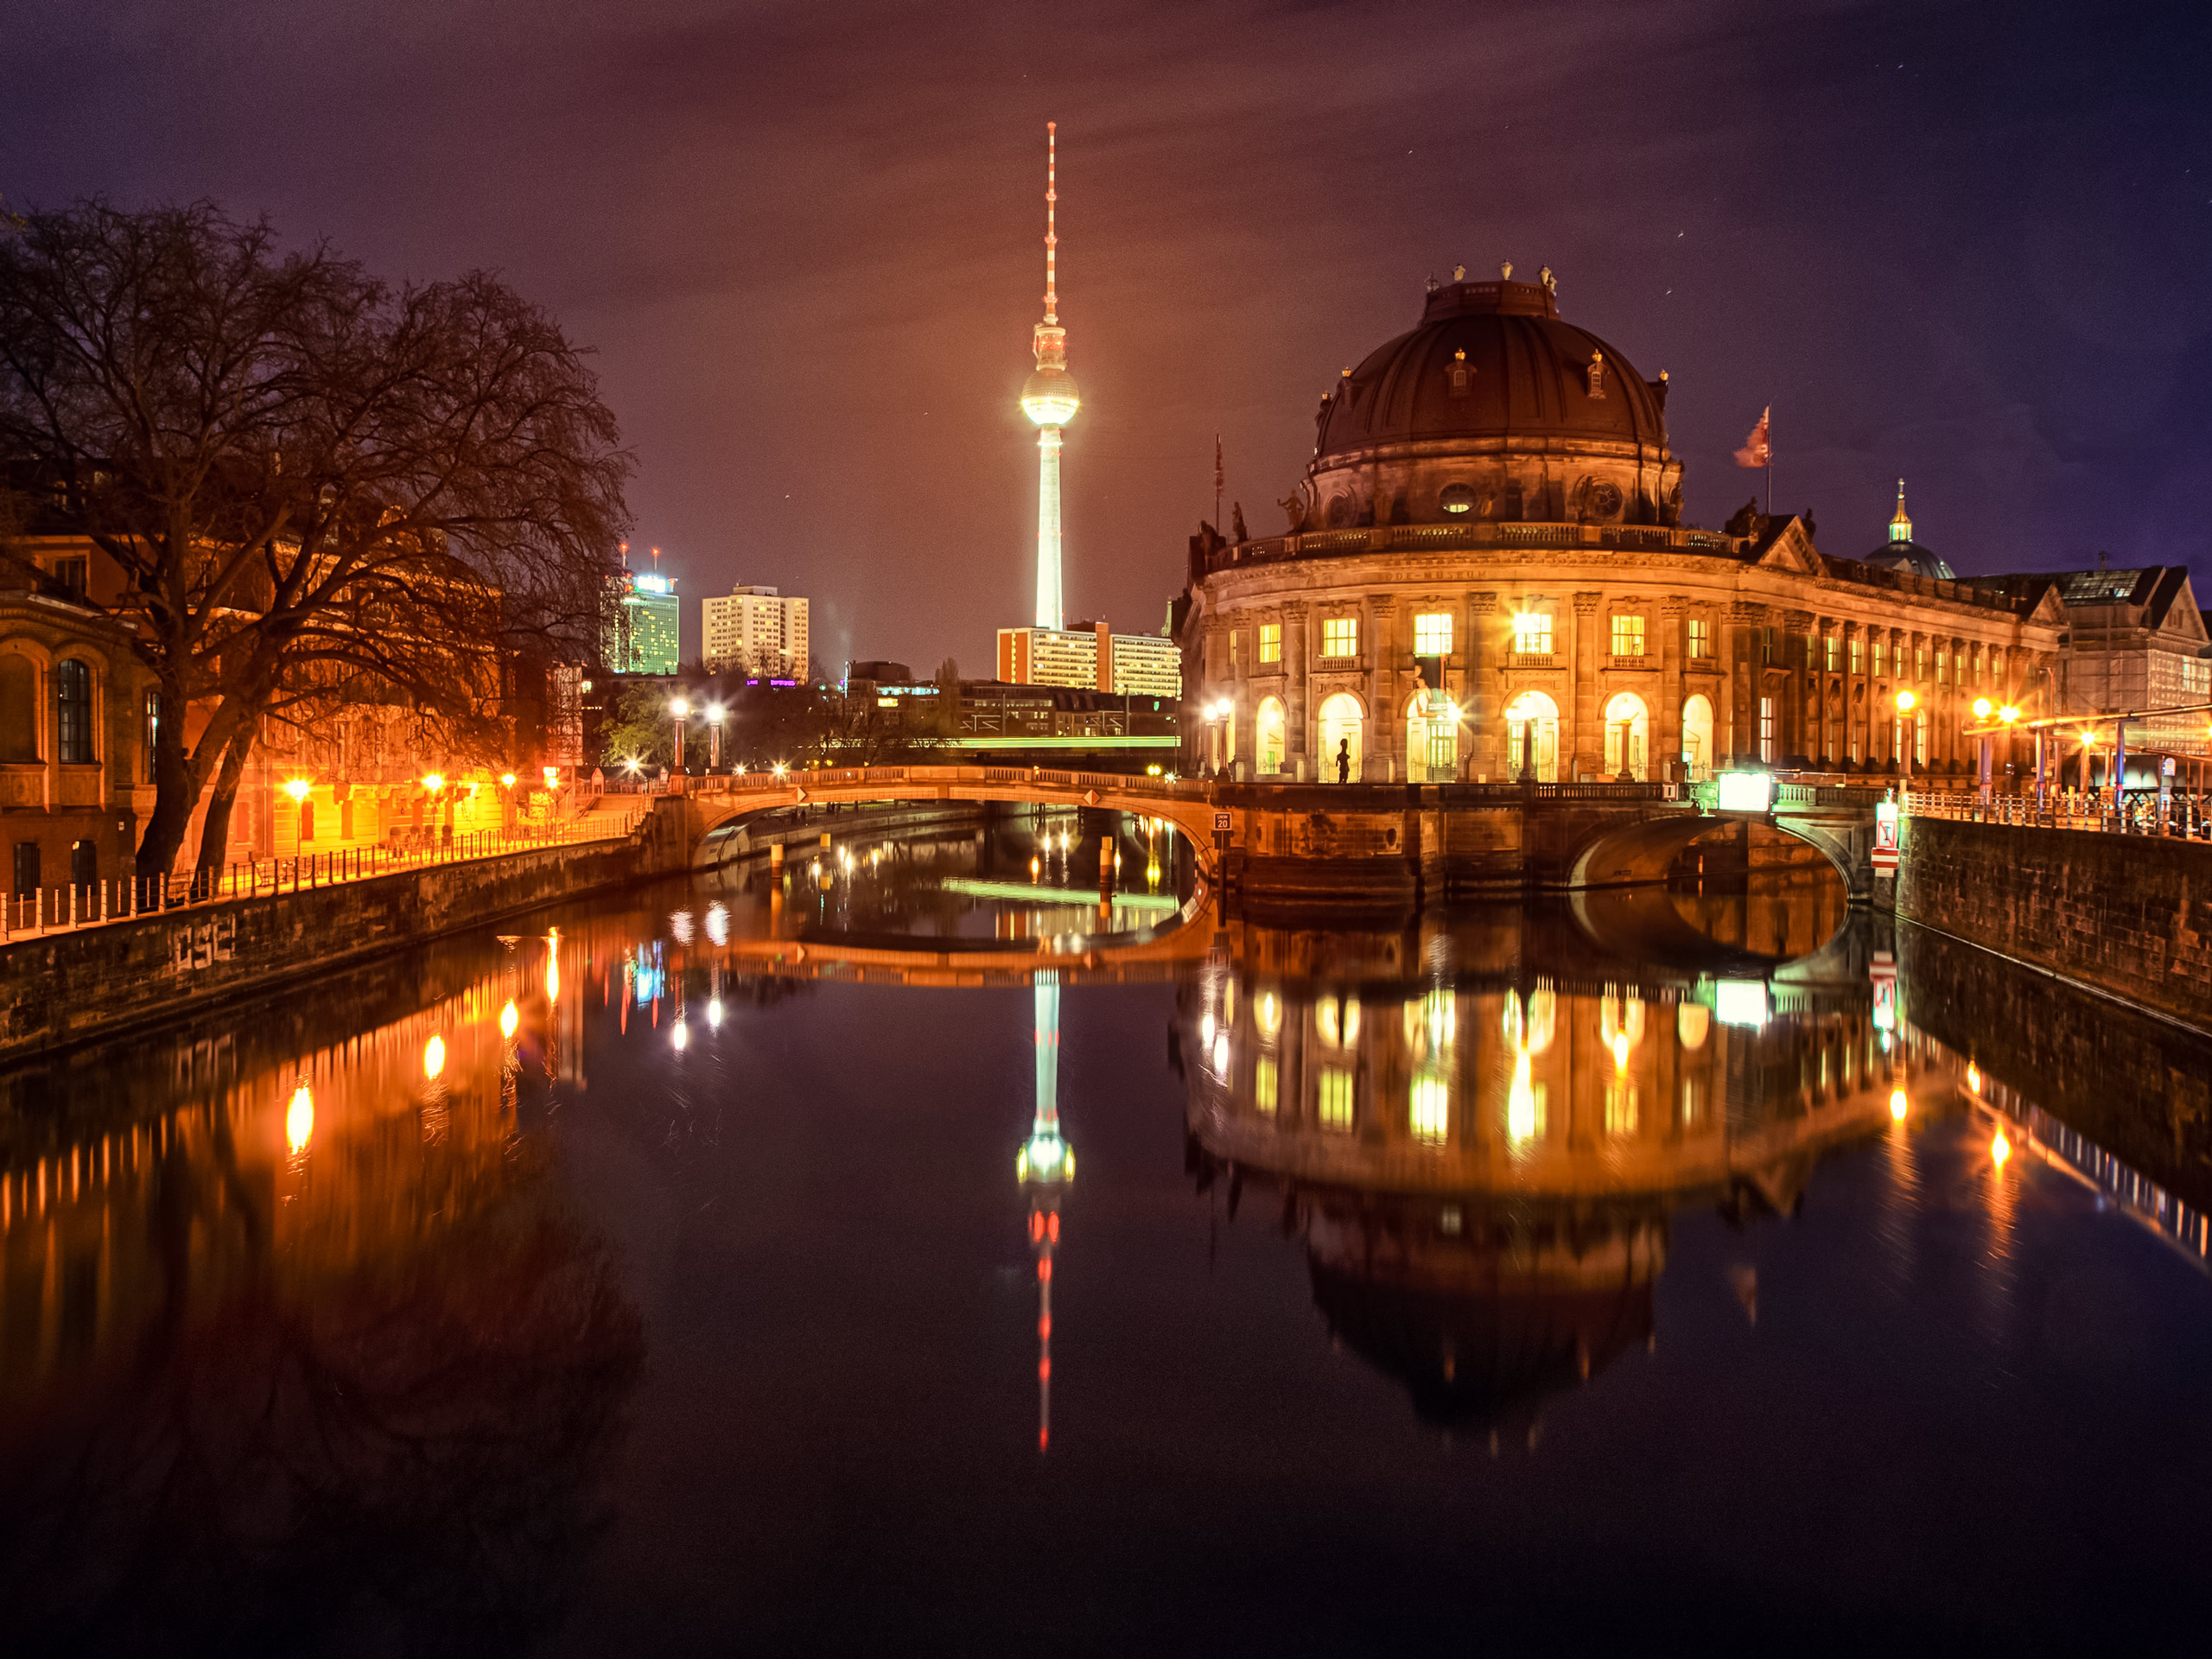 Berlins TV tower illuminated at night